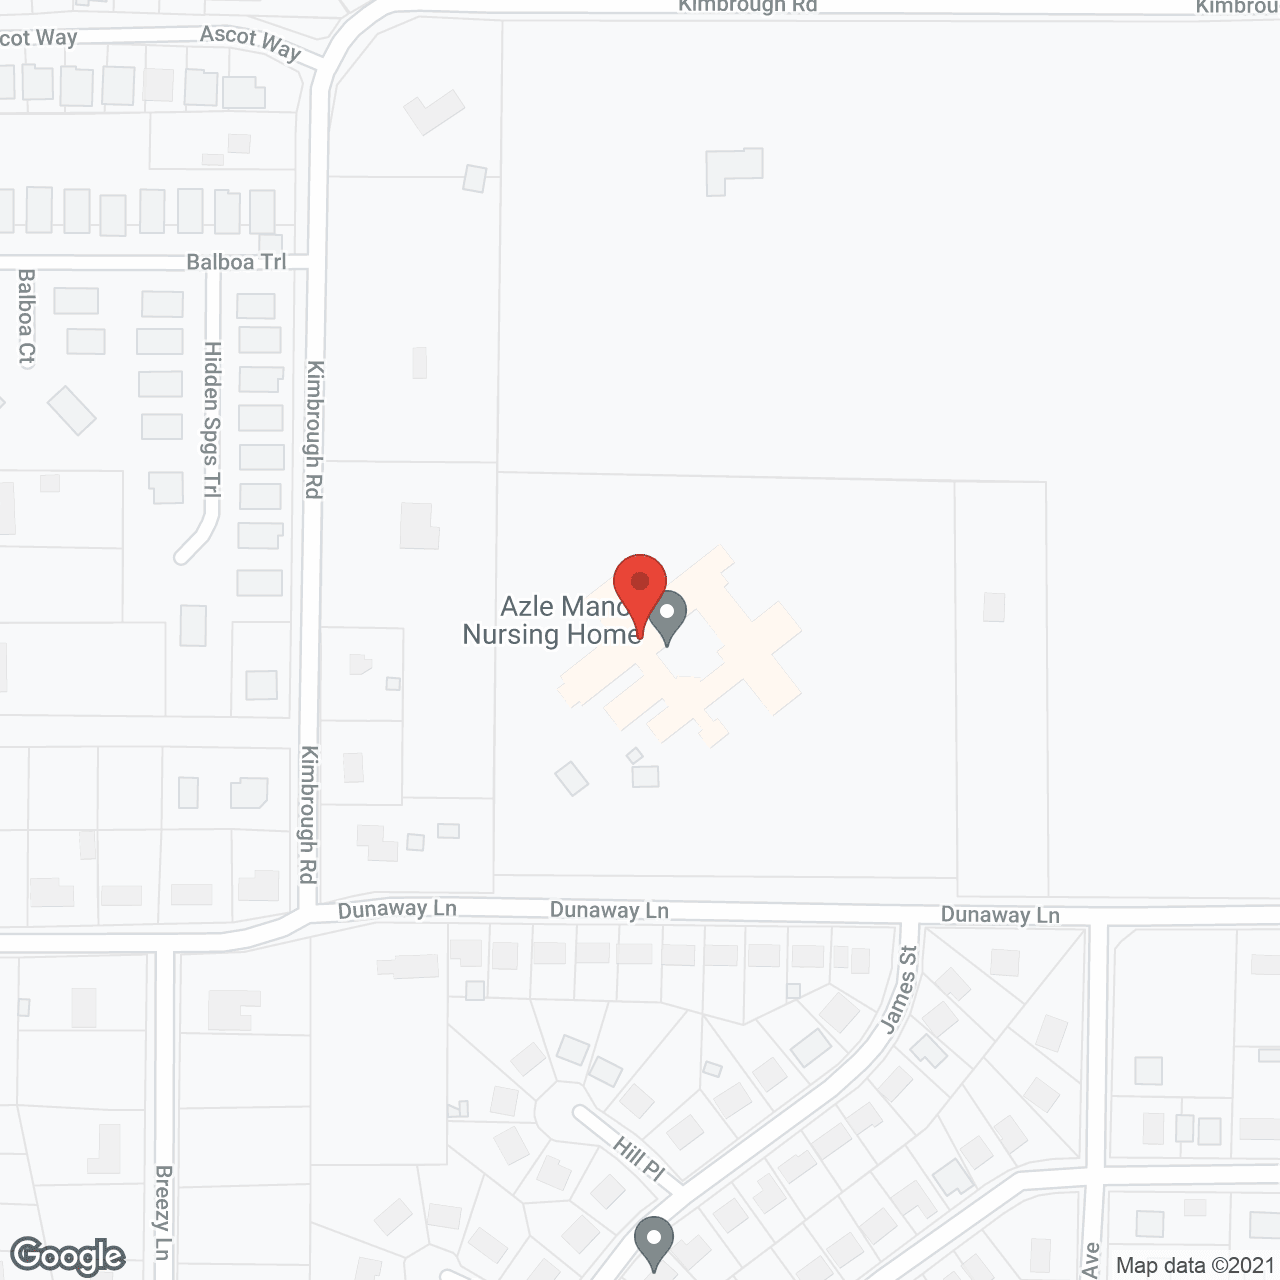 Azle Manor Nursing Home in google map